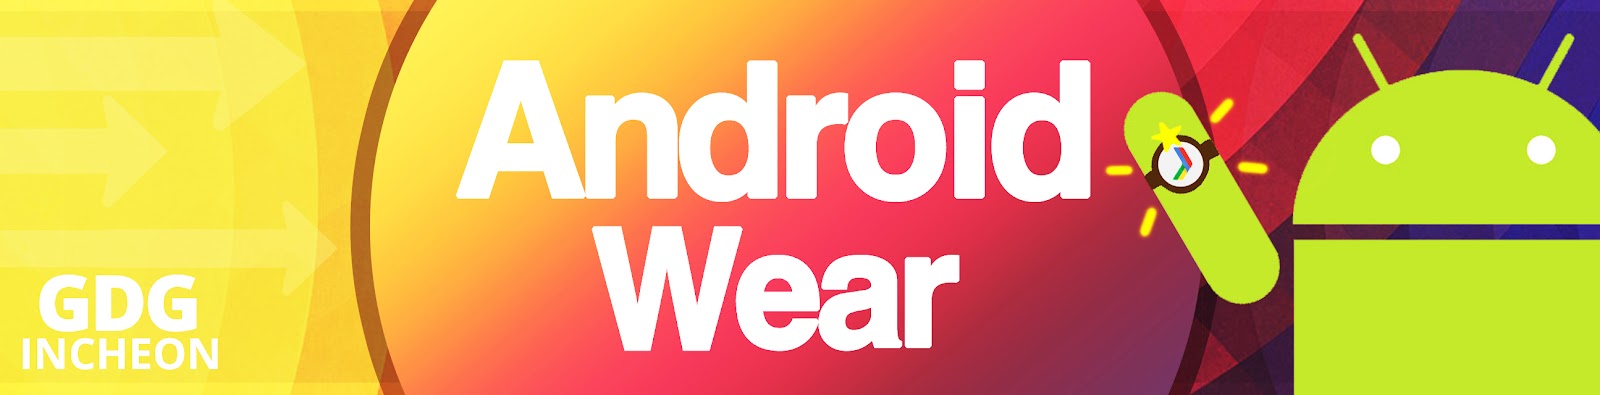 2014 Android Wear @Incheon.jpg